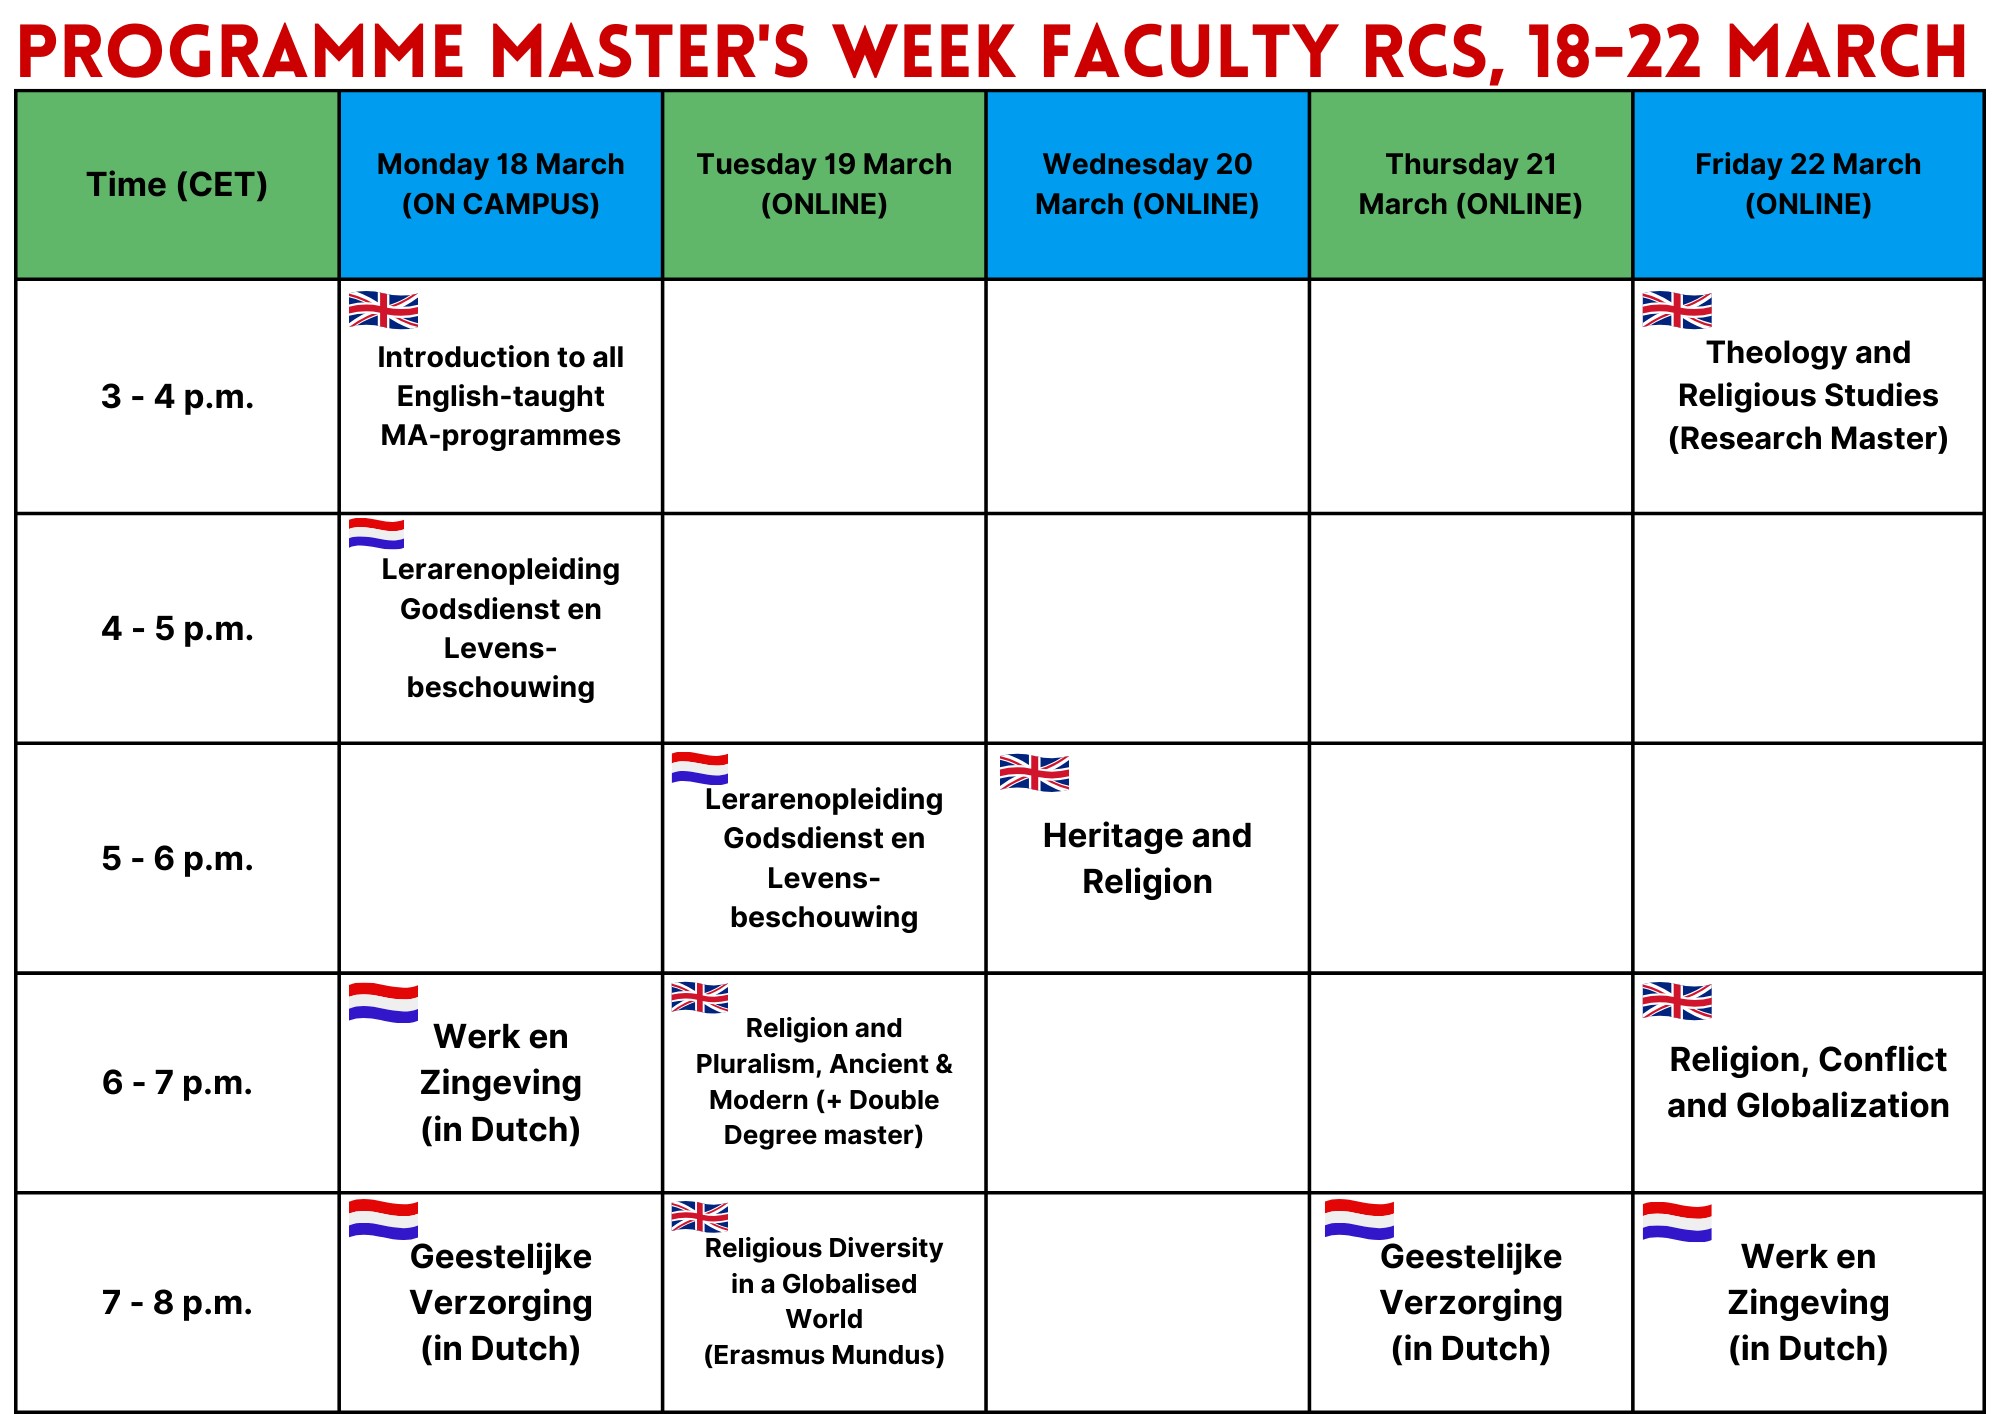 Programme Master's Week Faculty RCS